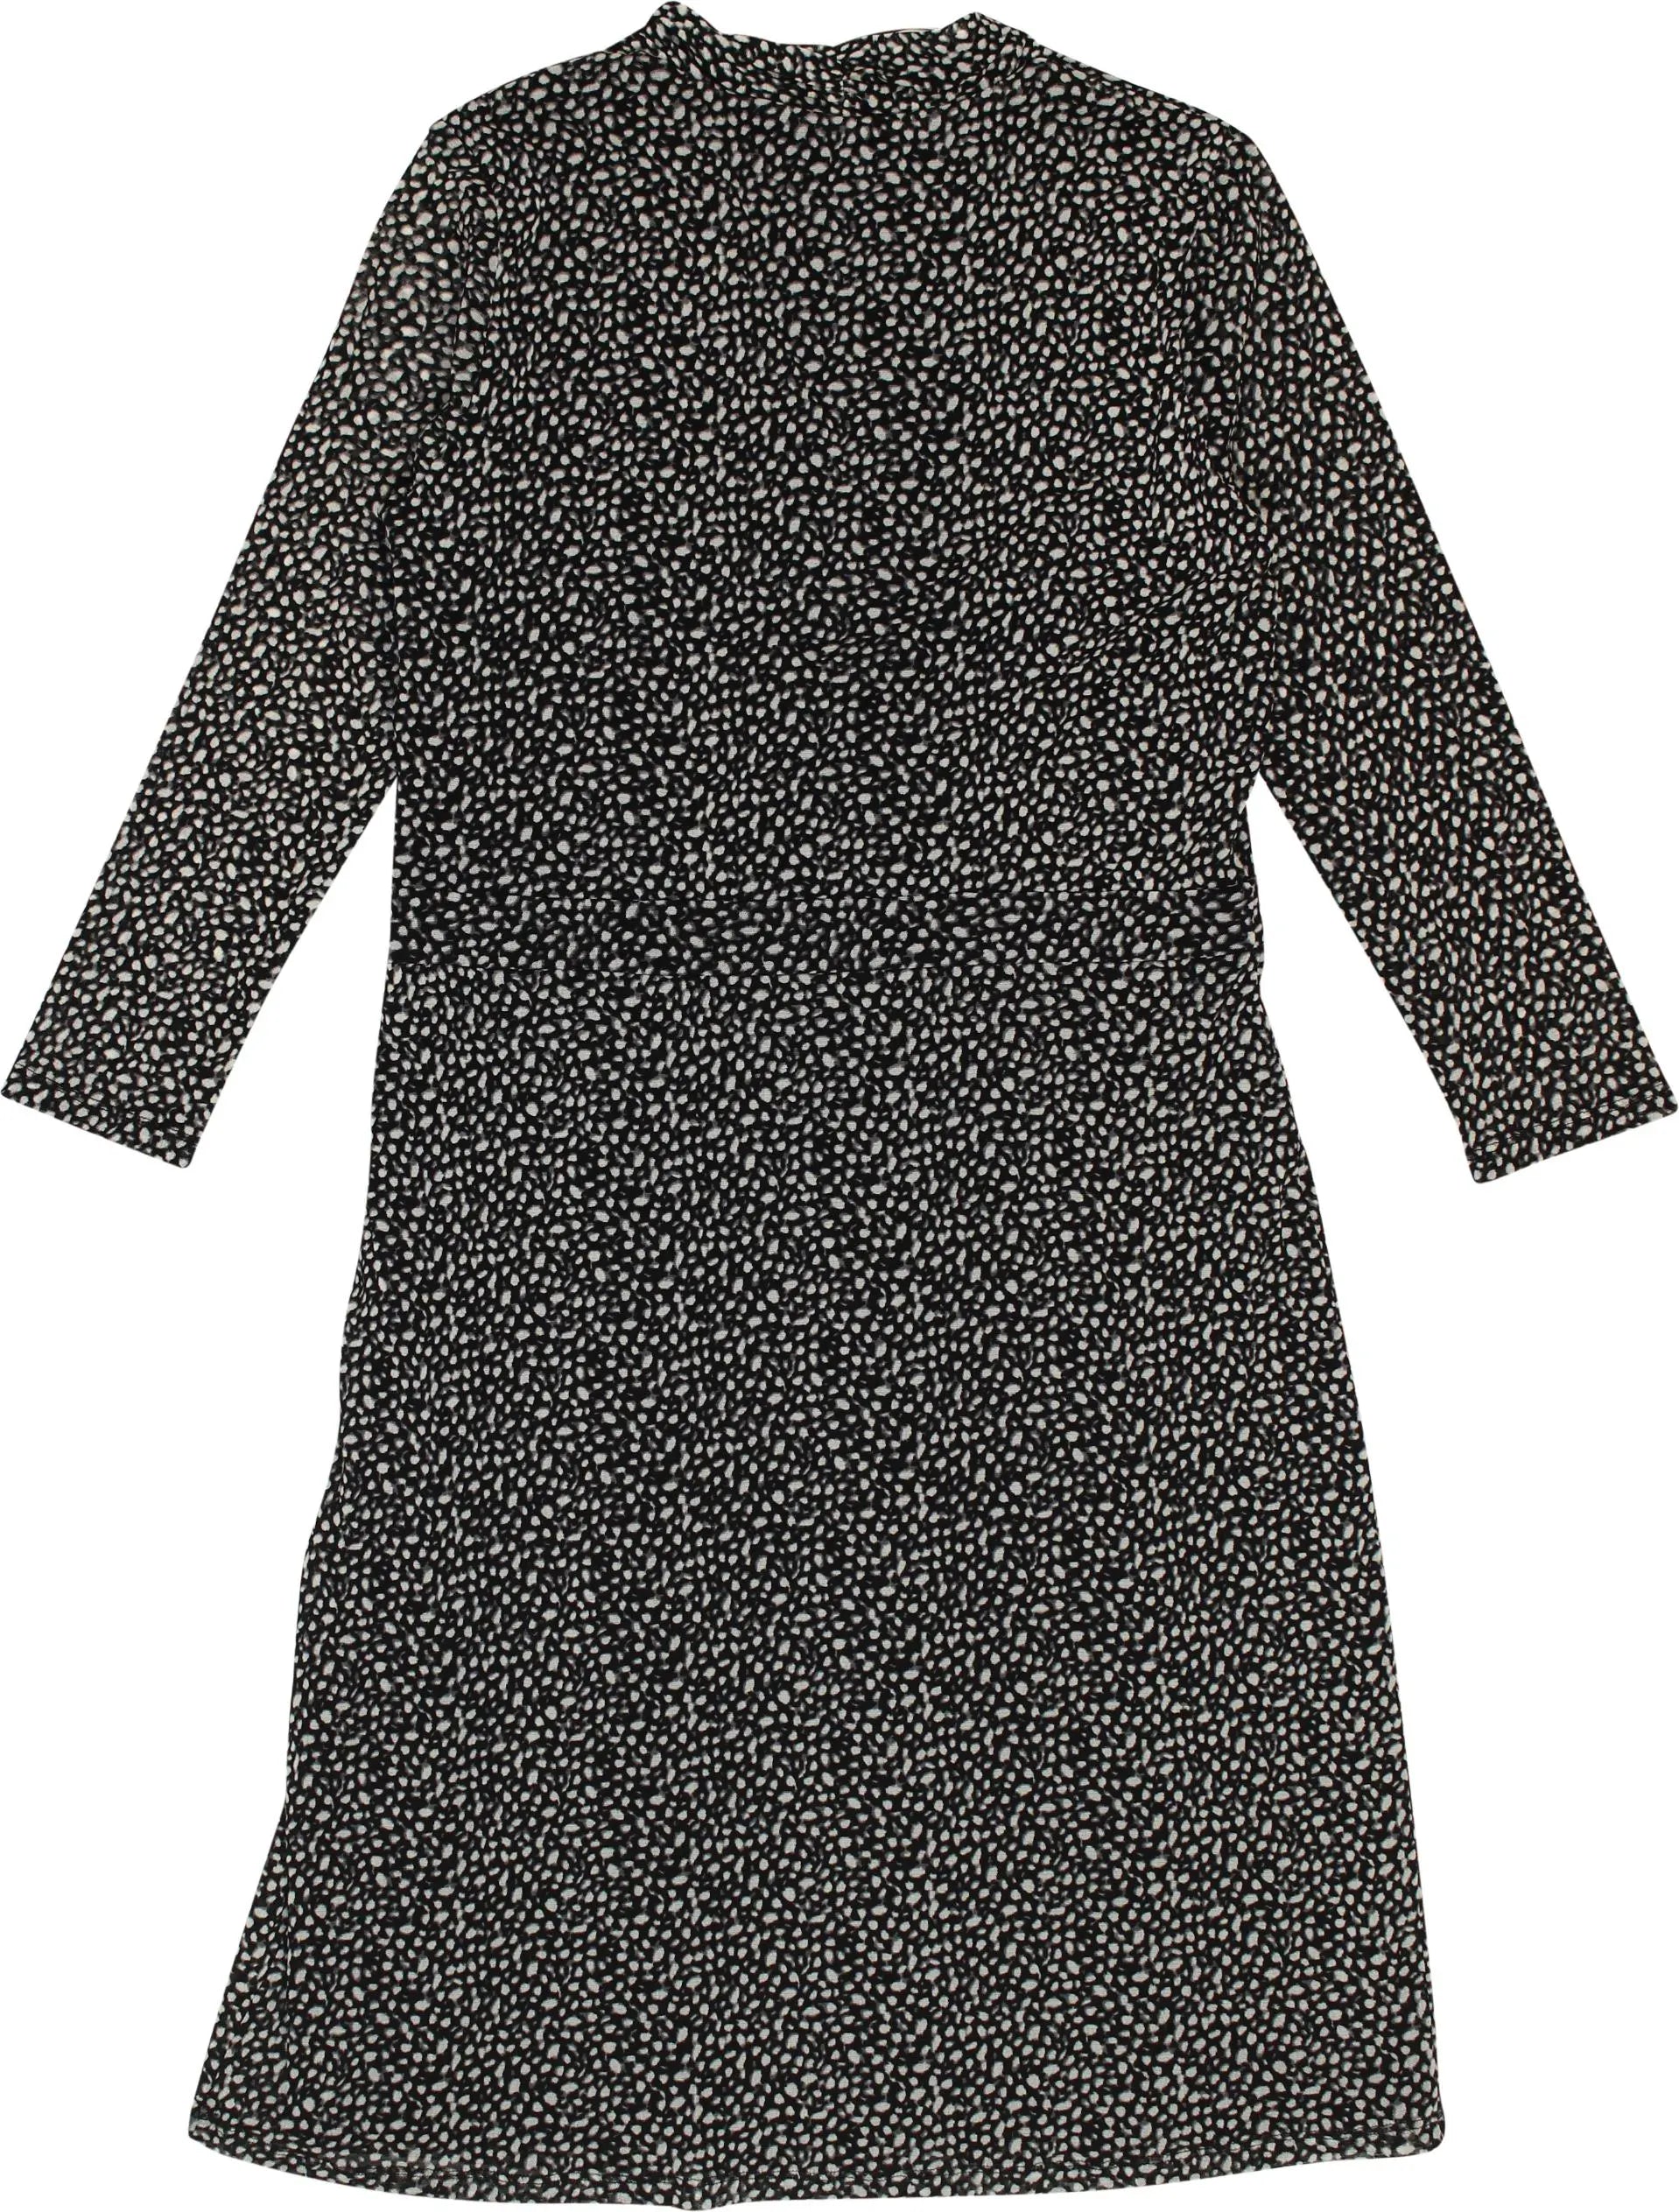 Esprit - Patterned Dress- ThriftTale.com - Vintage and second handclothing